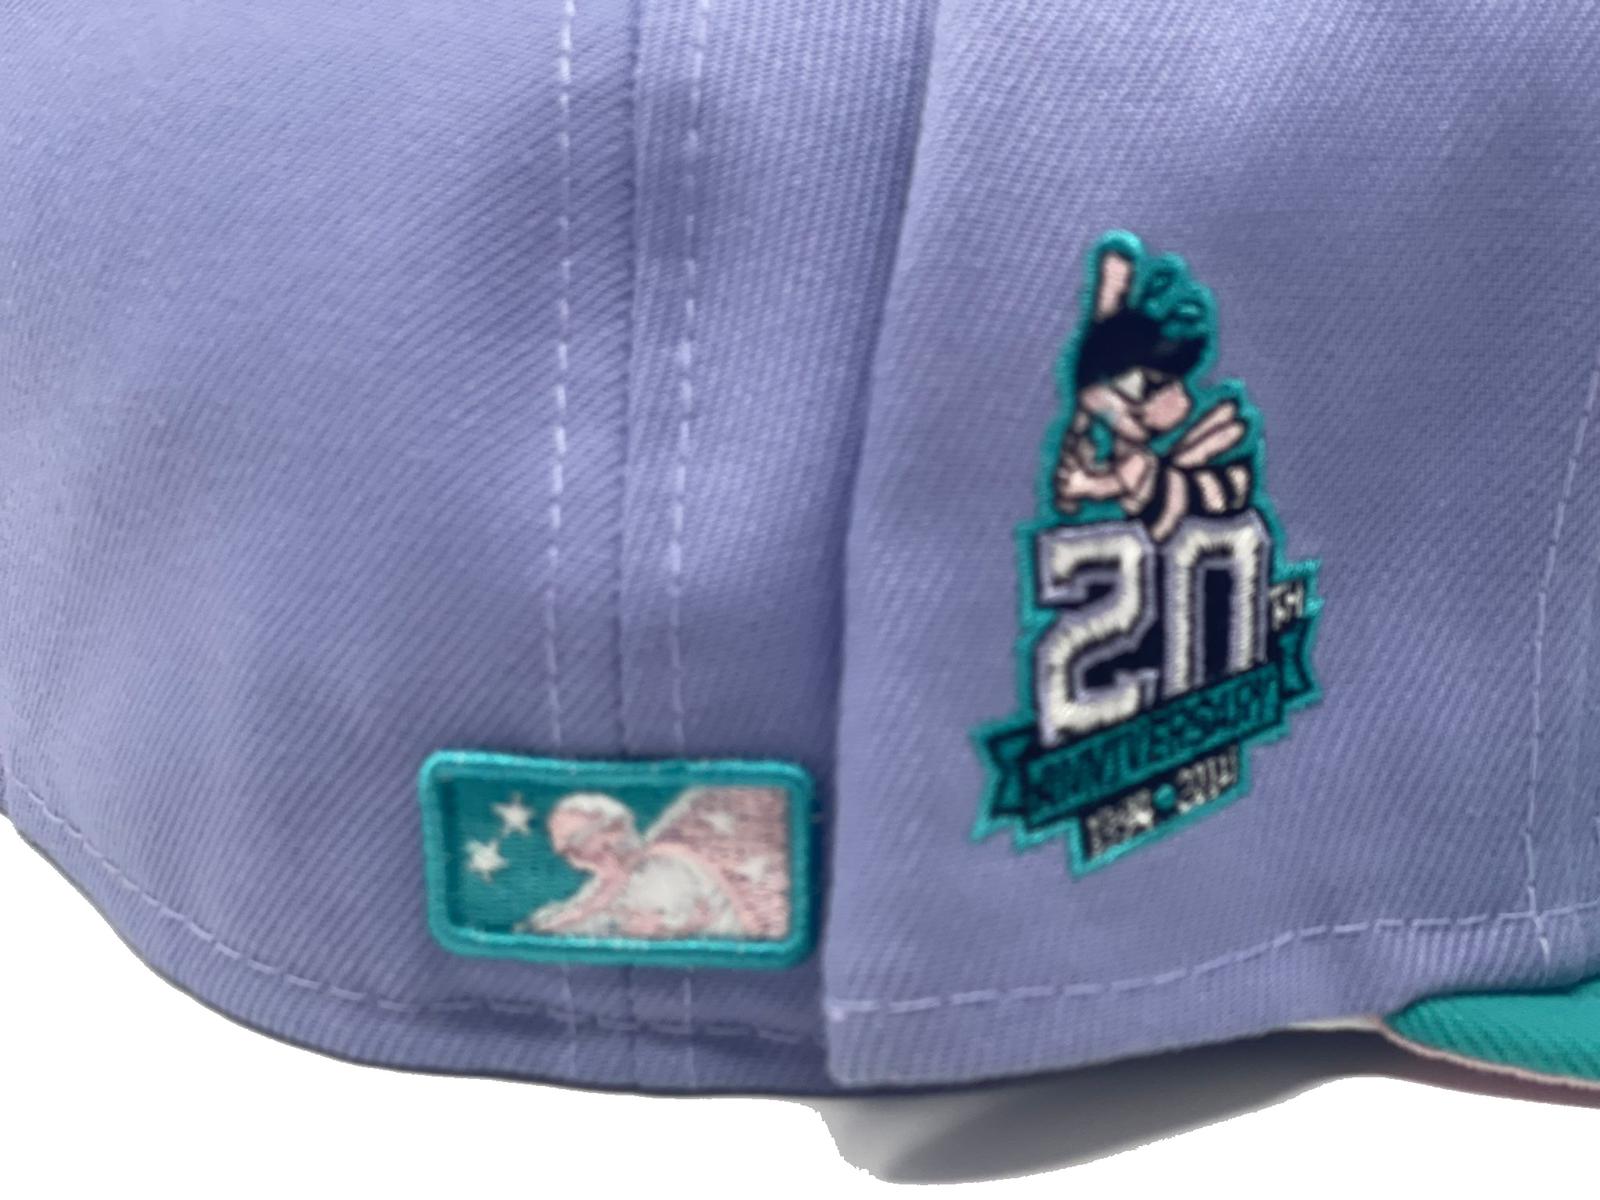 Salt Lake Bees Minor League Baseball Fan Apparel and Souvenirs for